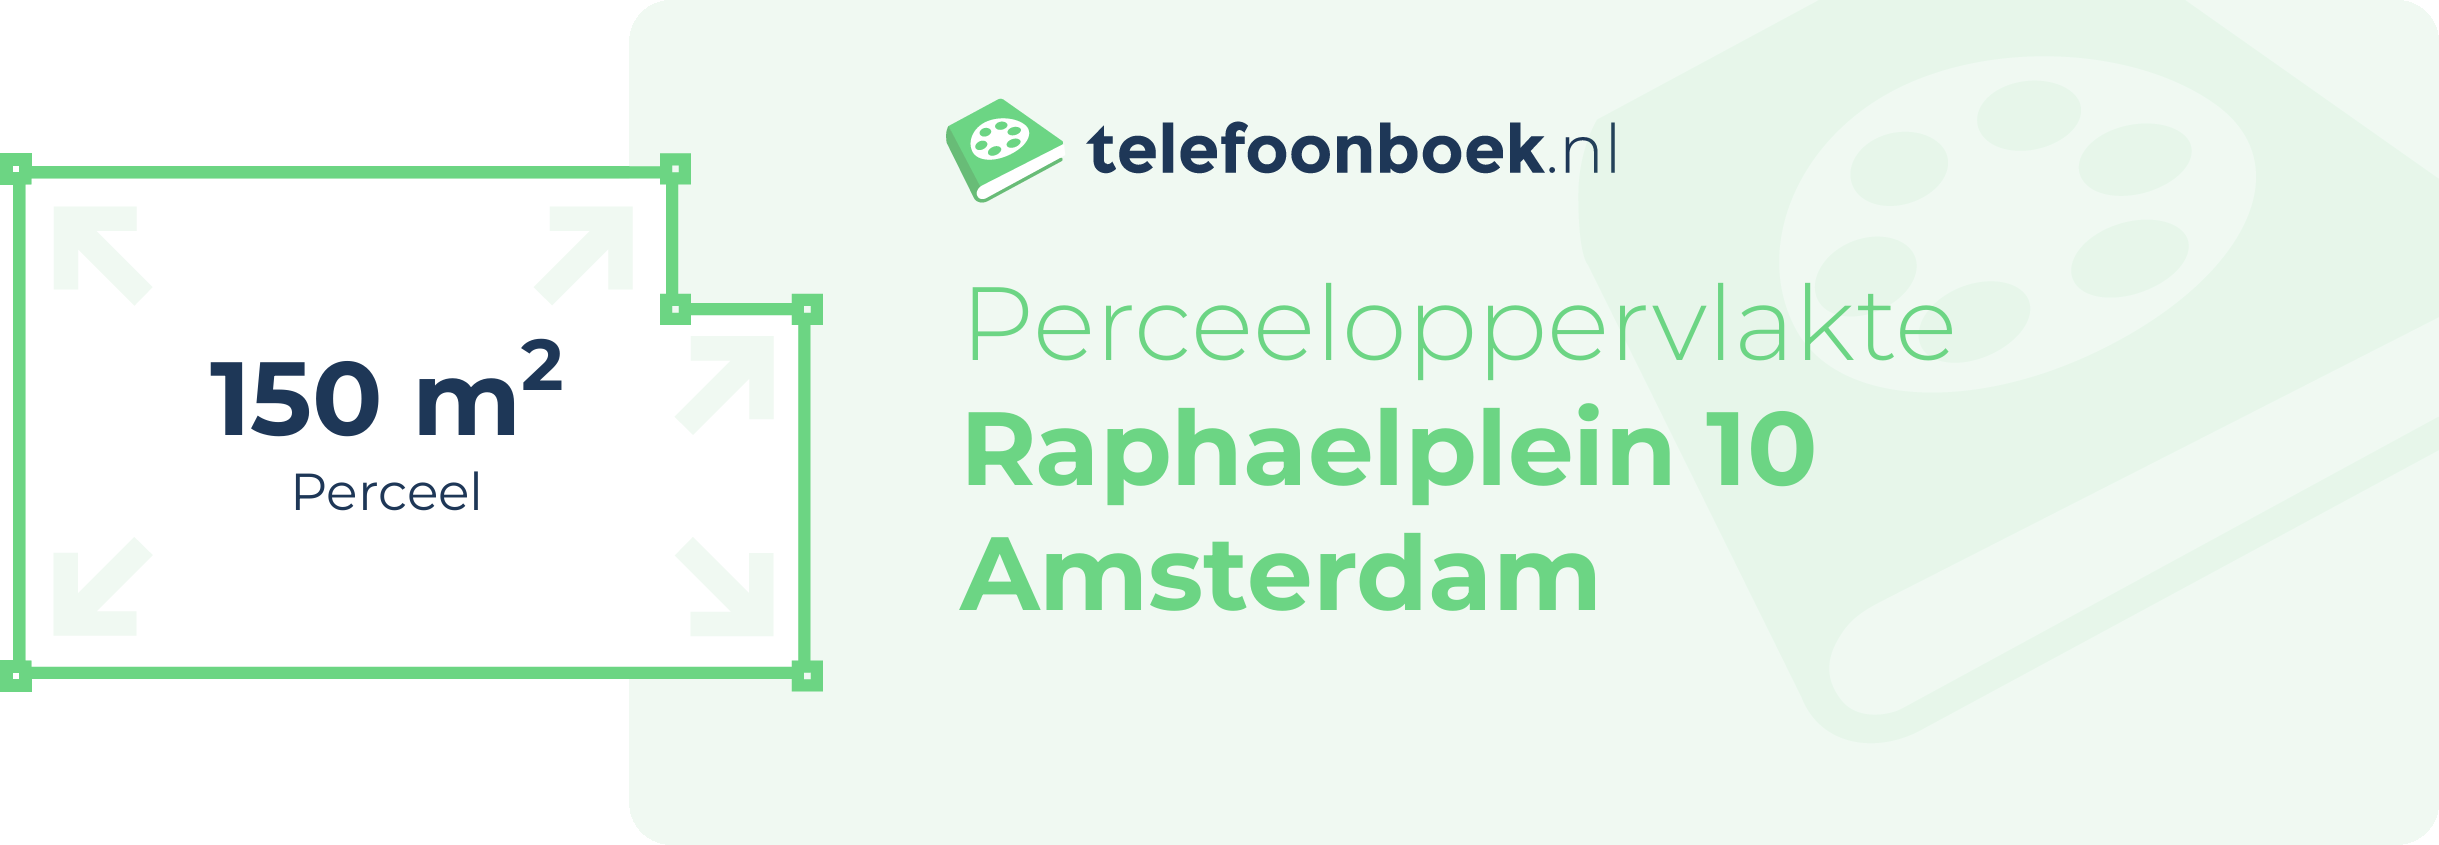 Perceeloppervlakte Raphaelplein 10 Amsterdam